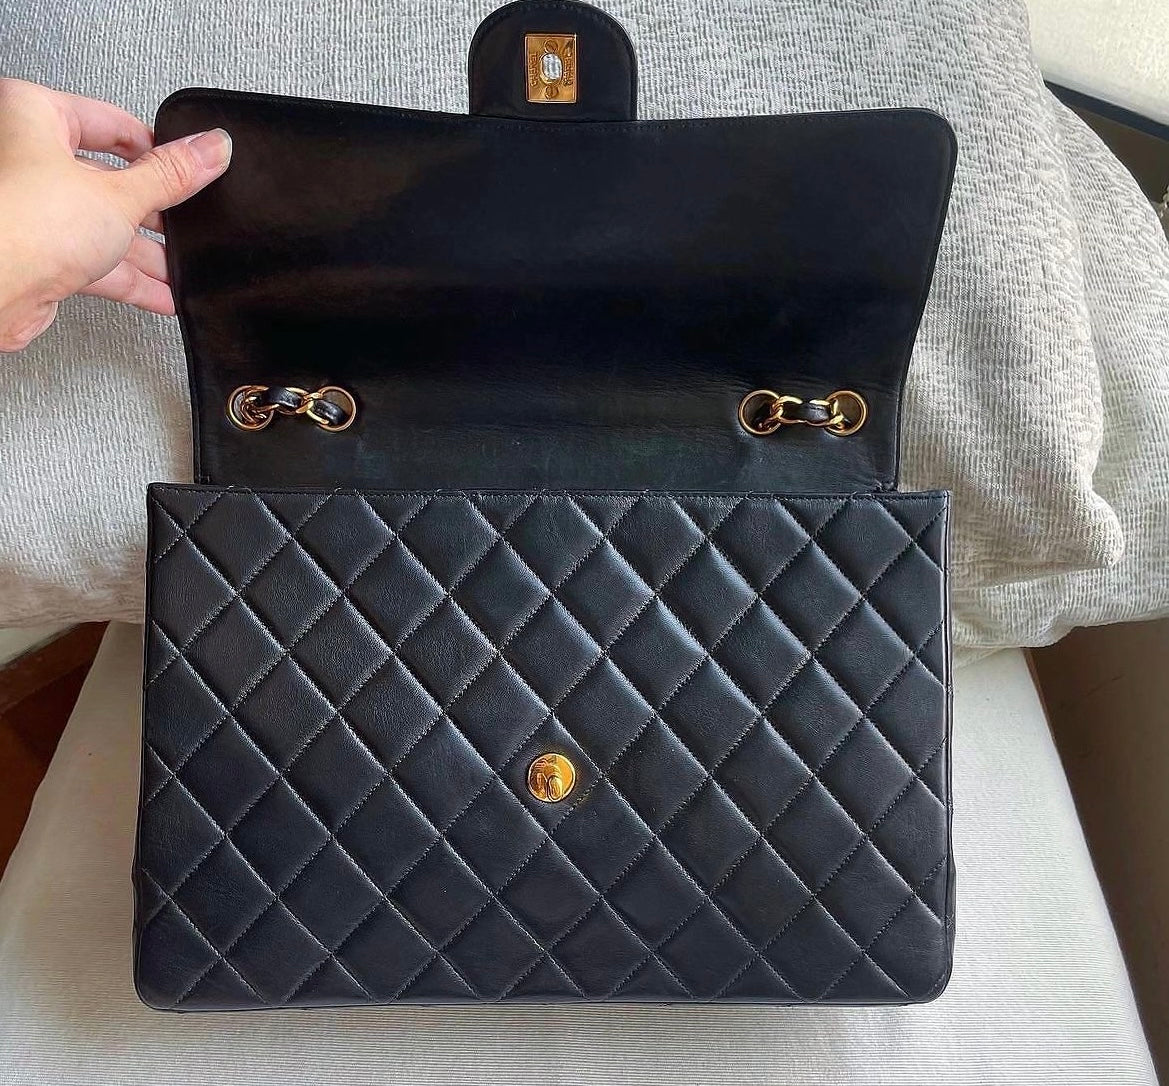 Chanel vintage jumbo black lambskin flap bag